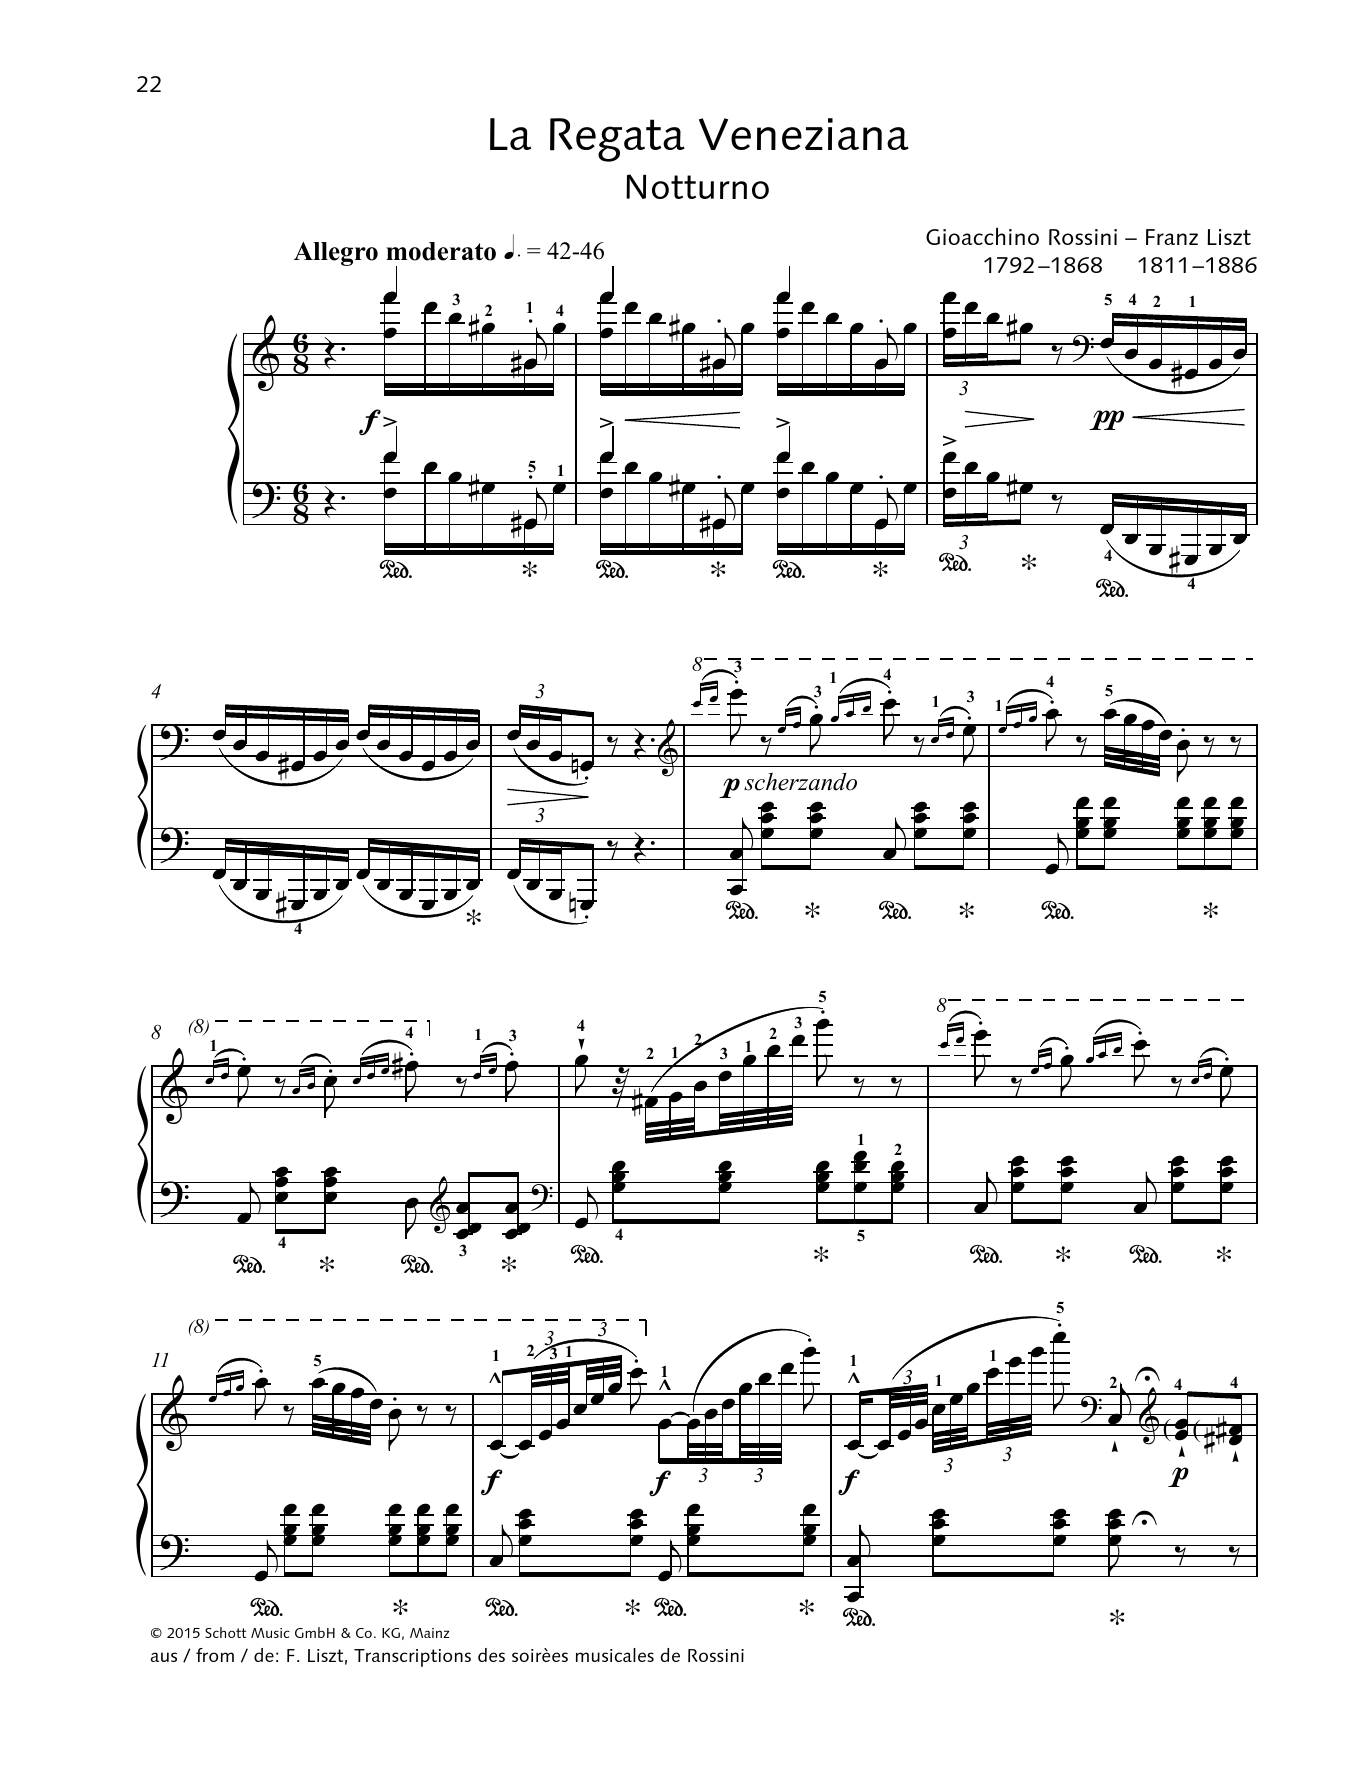 Franz Liszt; Giacchino Rossini La regata veneziana Sheet Music Notes & Chords for Piano Solo - Download or Print PDF